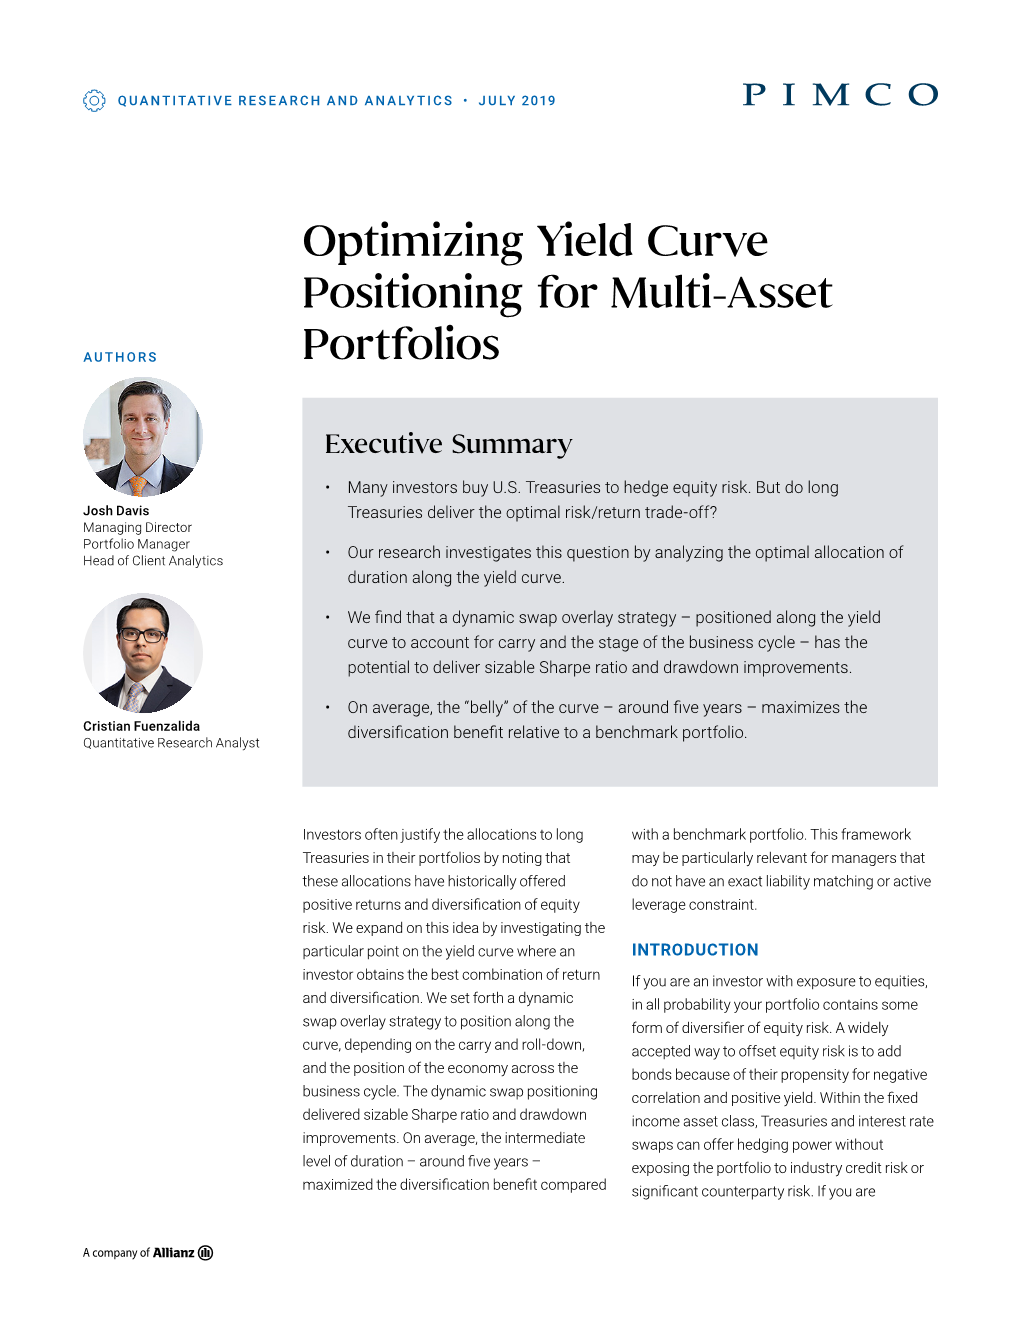 Optimizing Yield Curve Positioning for Multi-Asset Portfolios